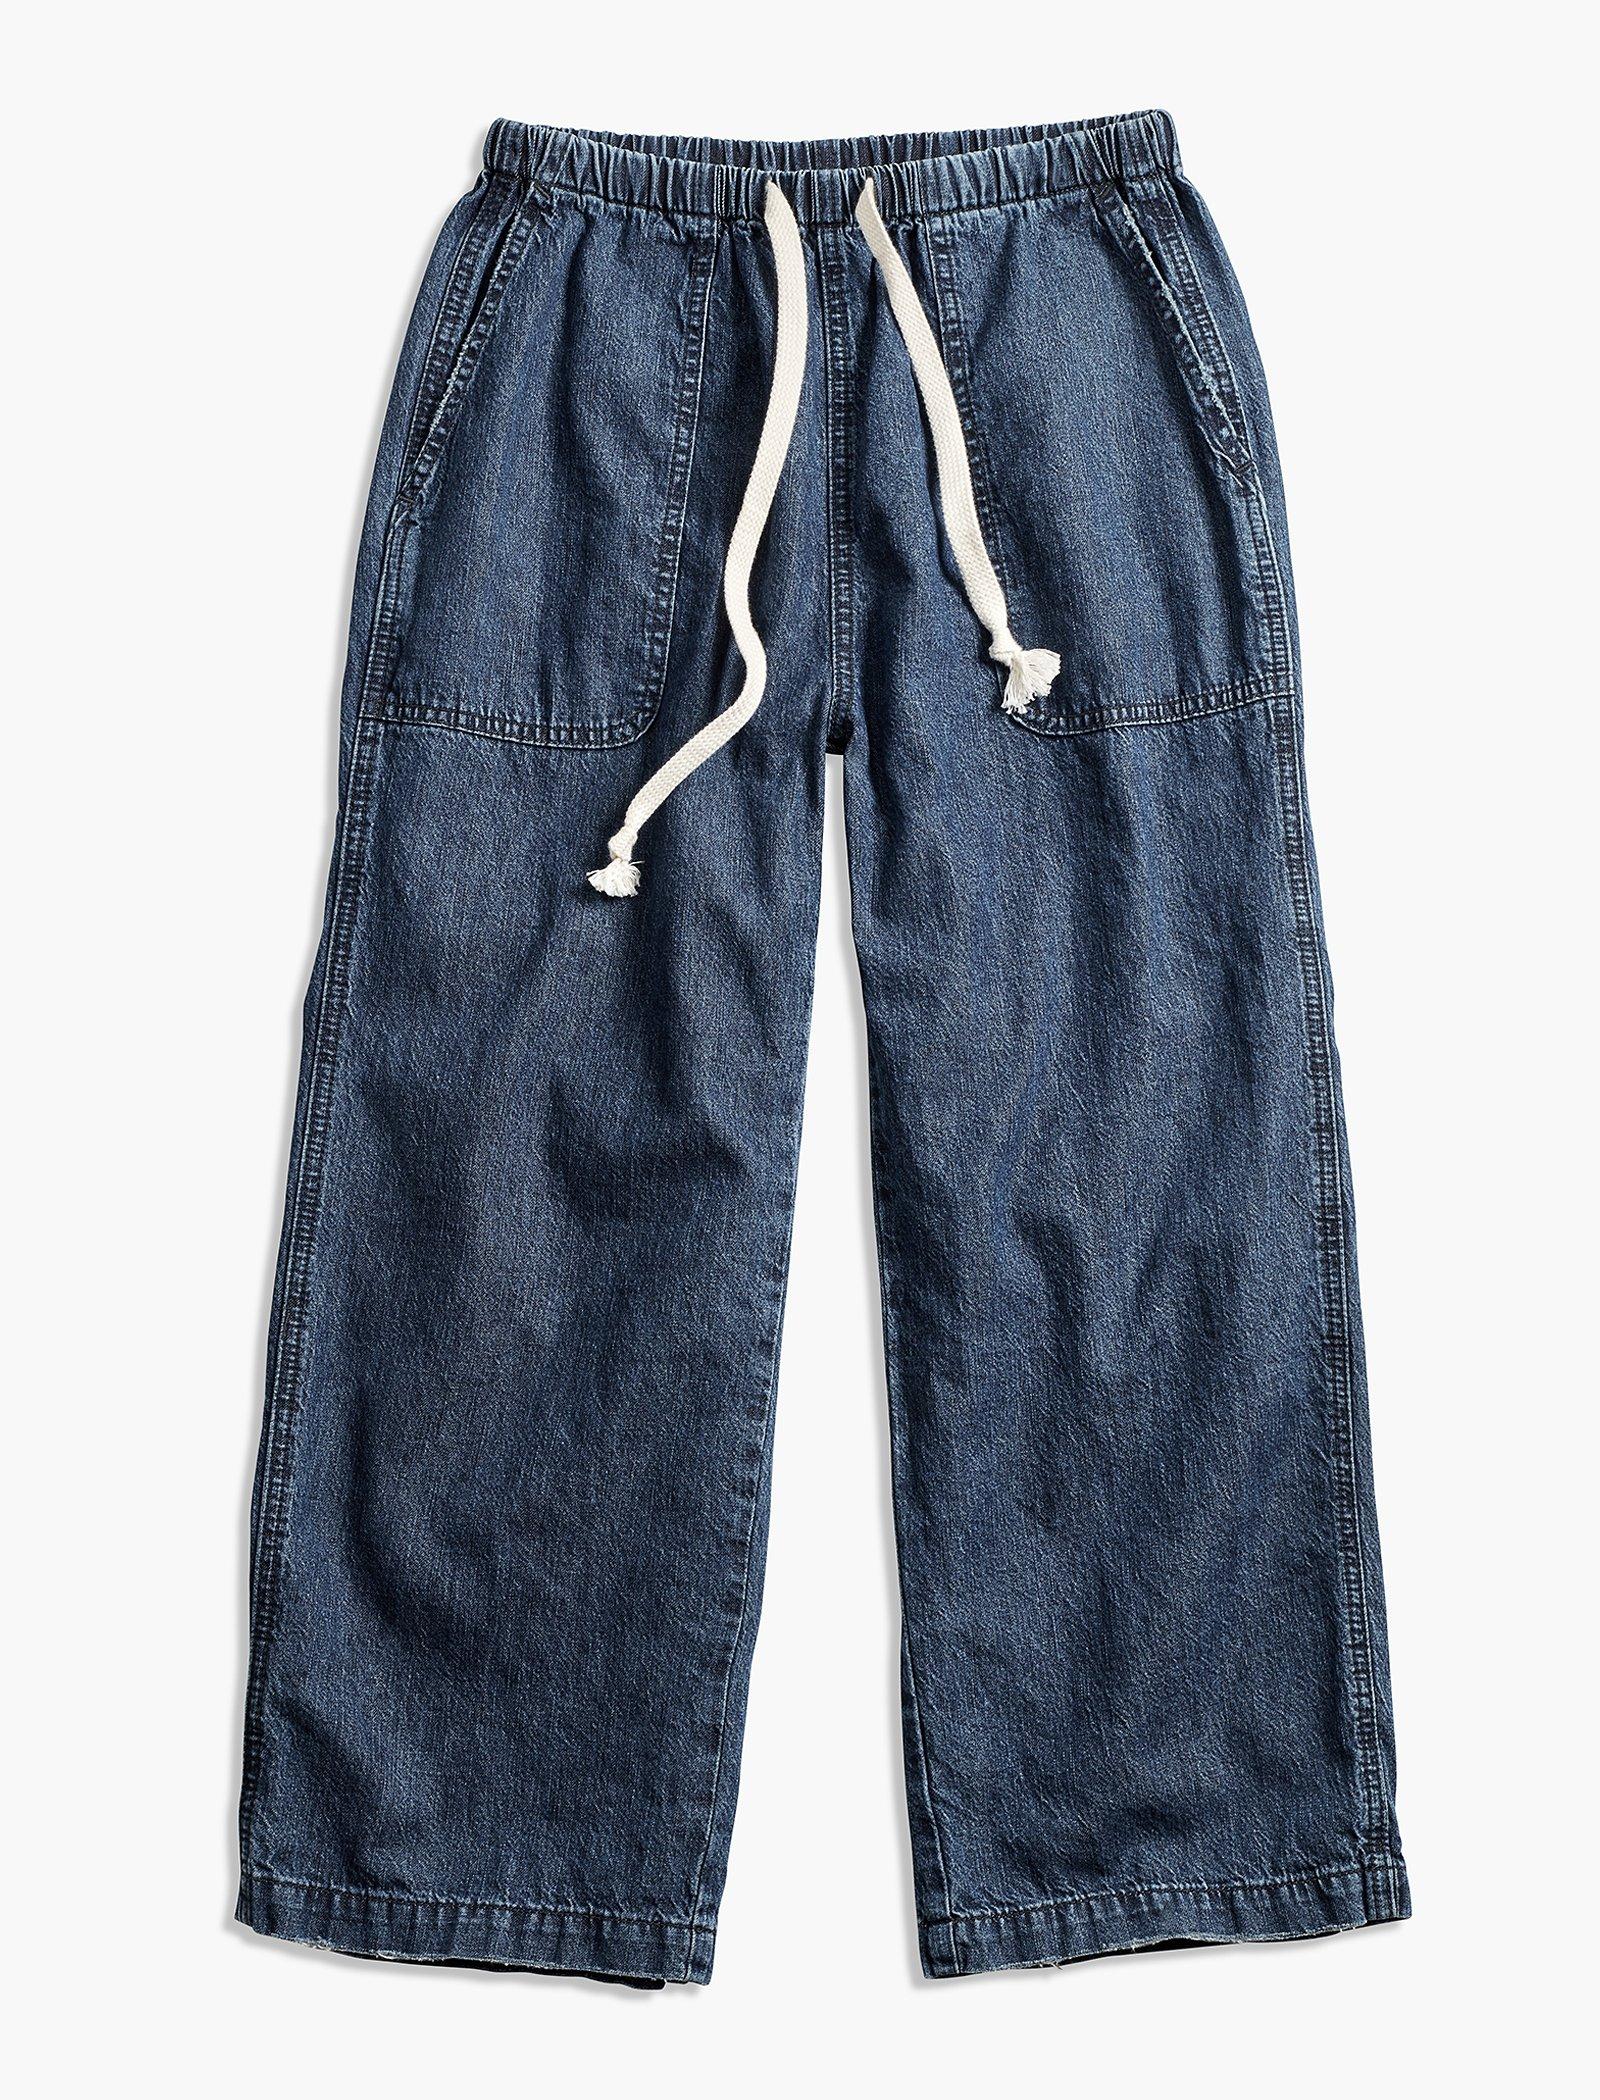 jaqueta jeans masculina oversized